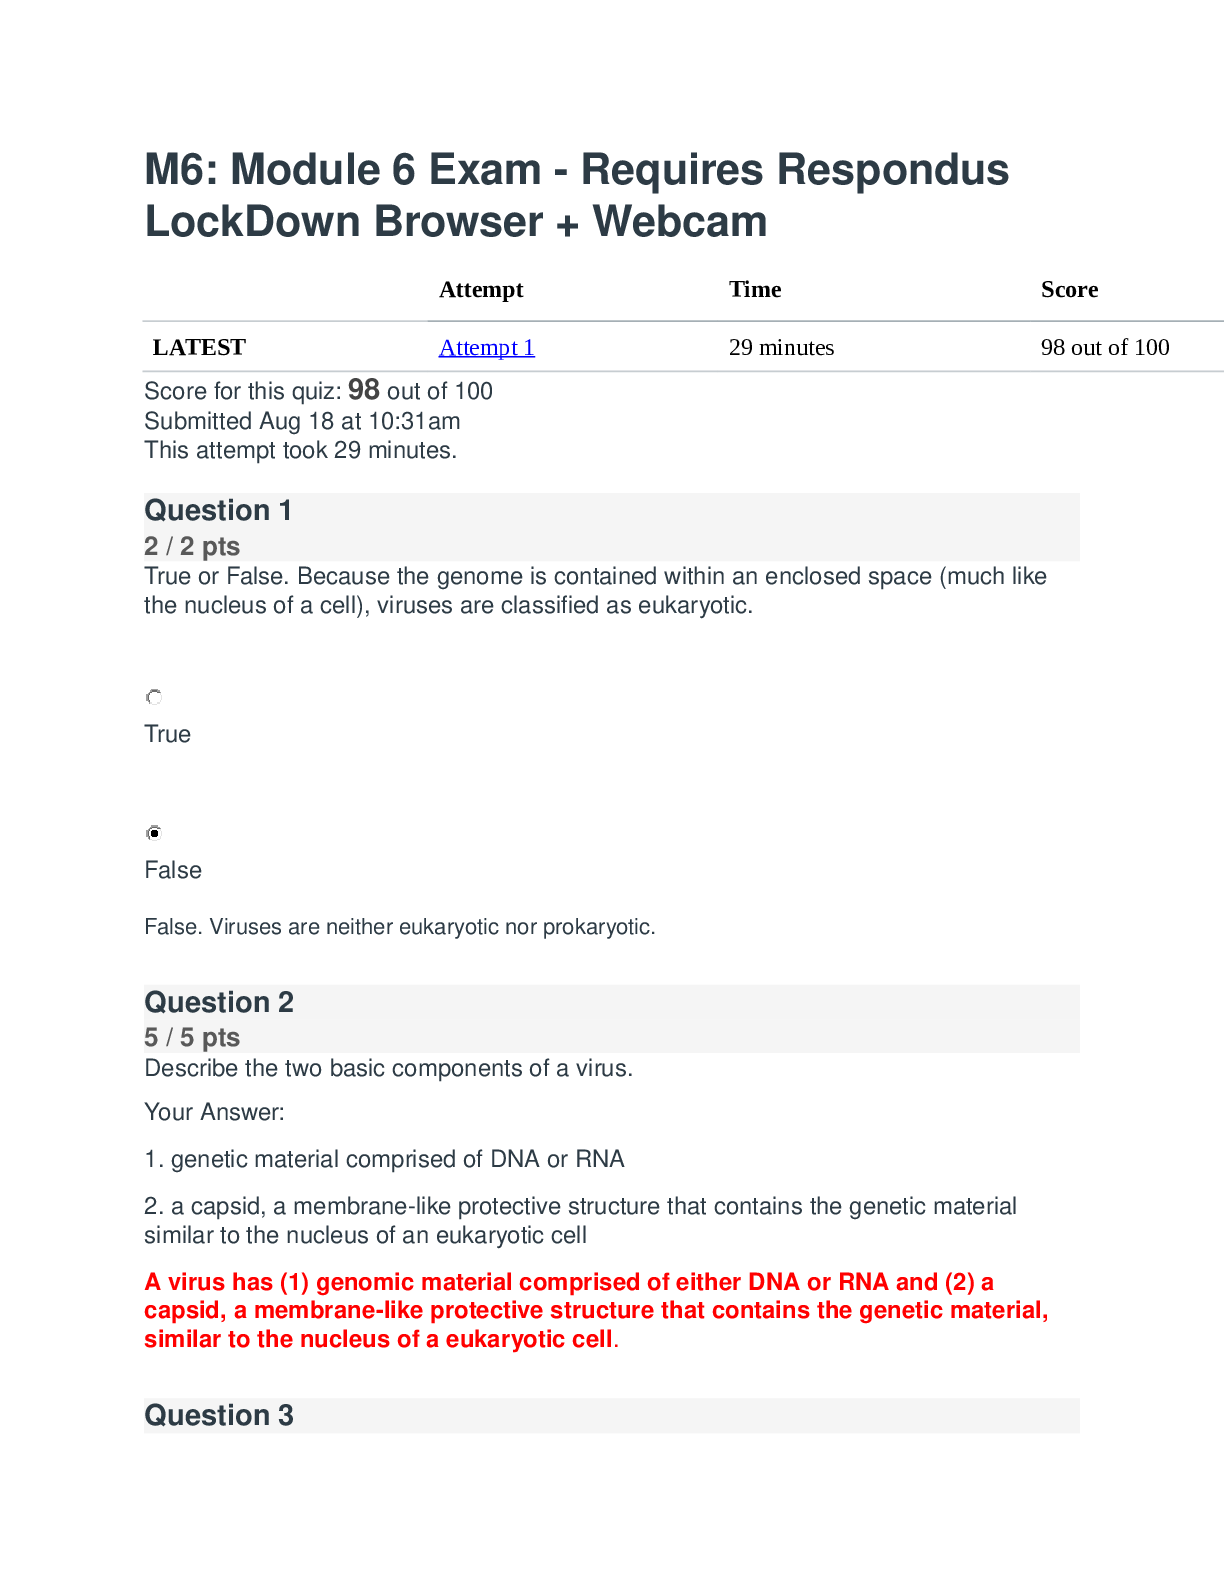 Module 6 Exam - Bio 171 Requires Respondus LockDown Browser + Webcam